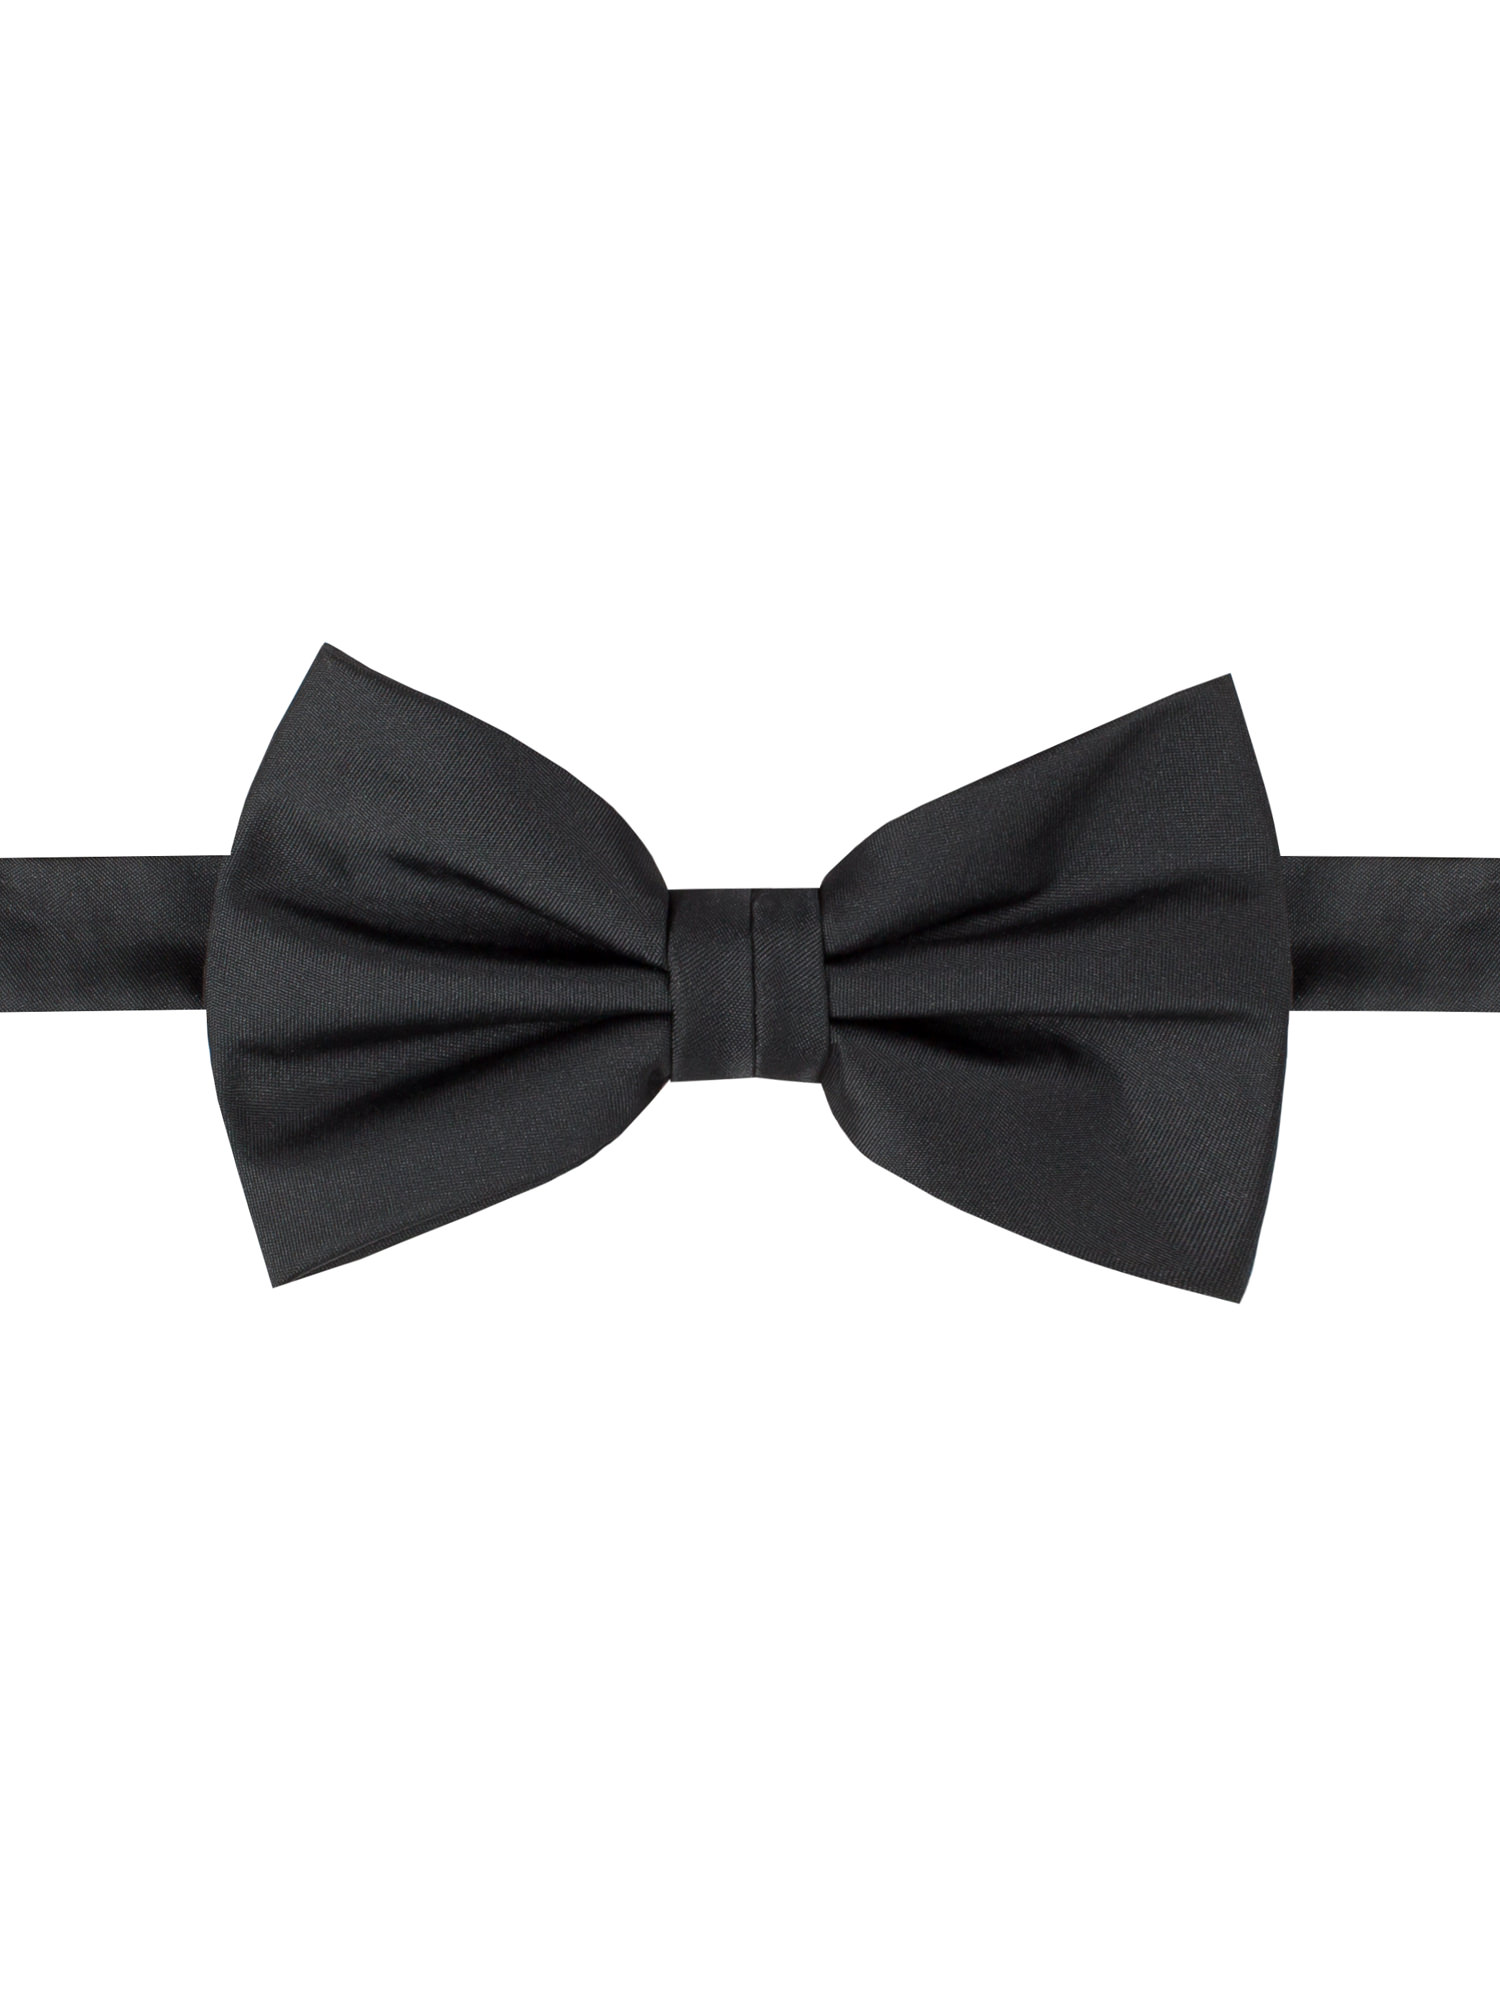 Black Bow Tie - Bow Ties - Alexandre London